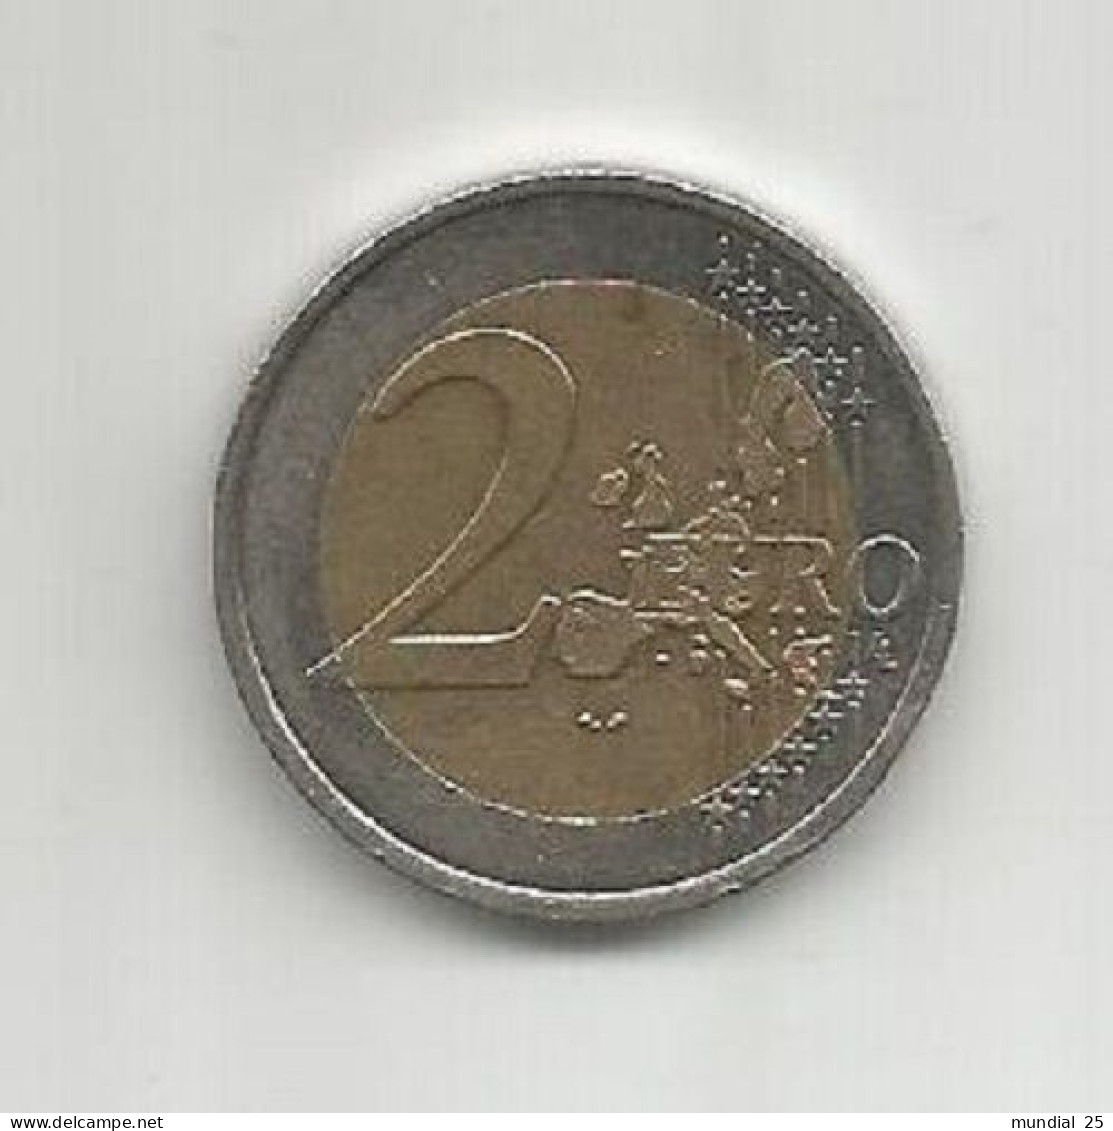 FRANCE 2 EURO 2001 - France